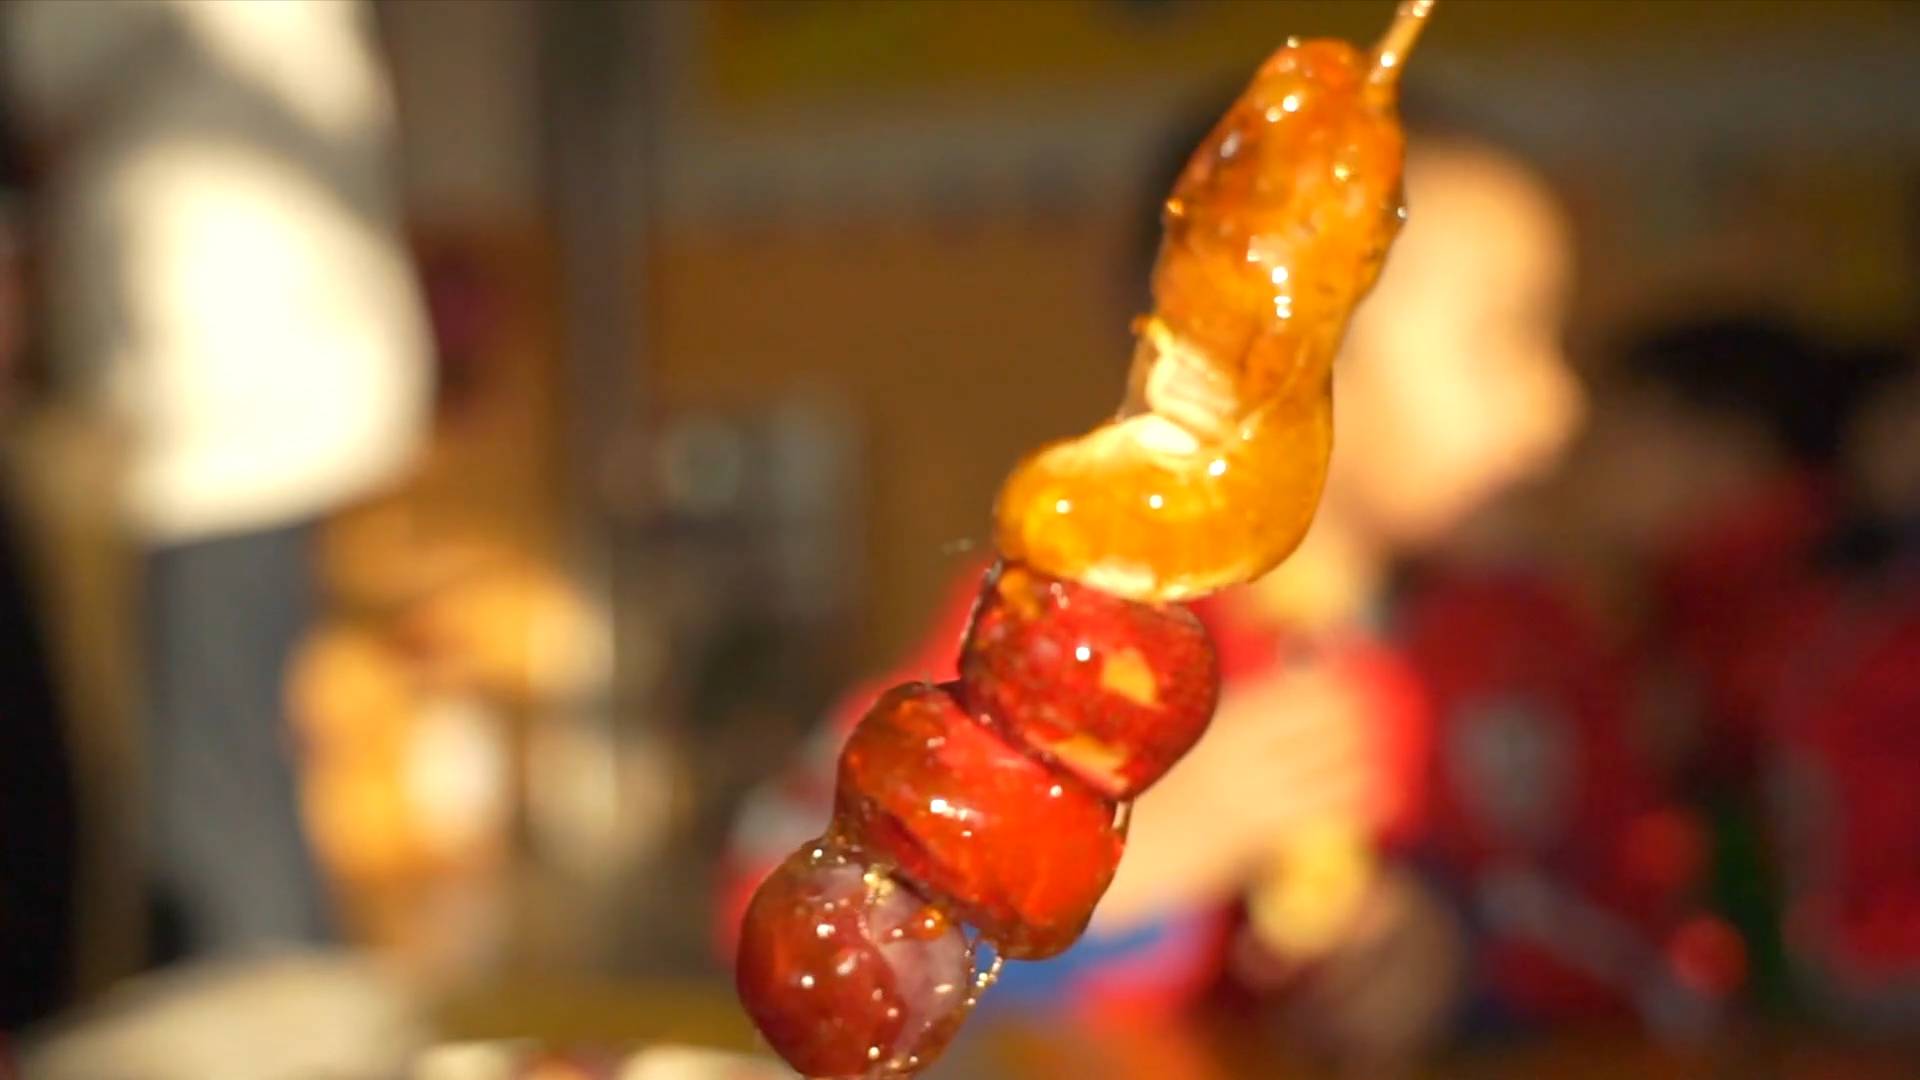 GLOBALink | Xinjiang, My home: Kids make sugarcoated fruits on sticks